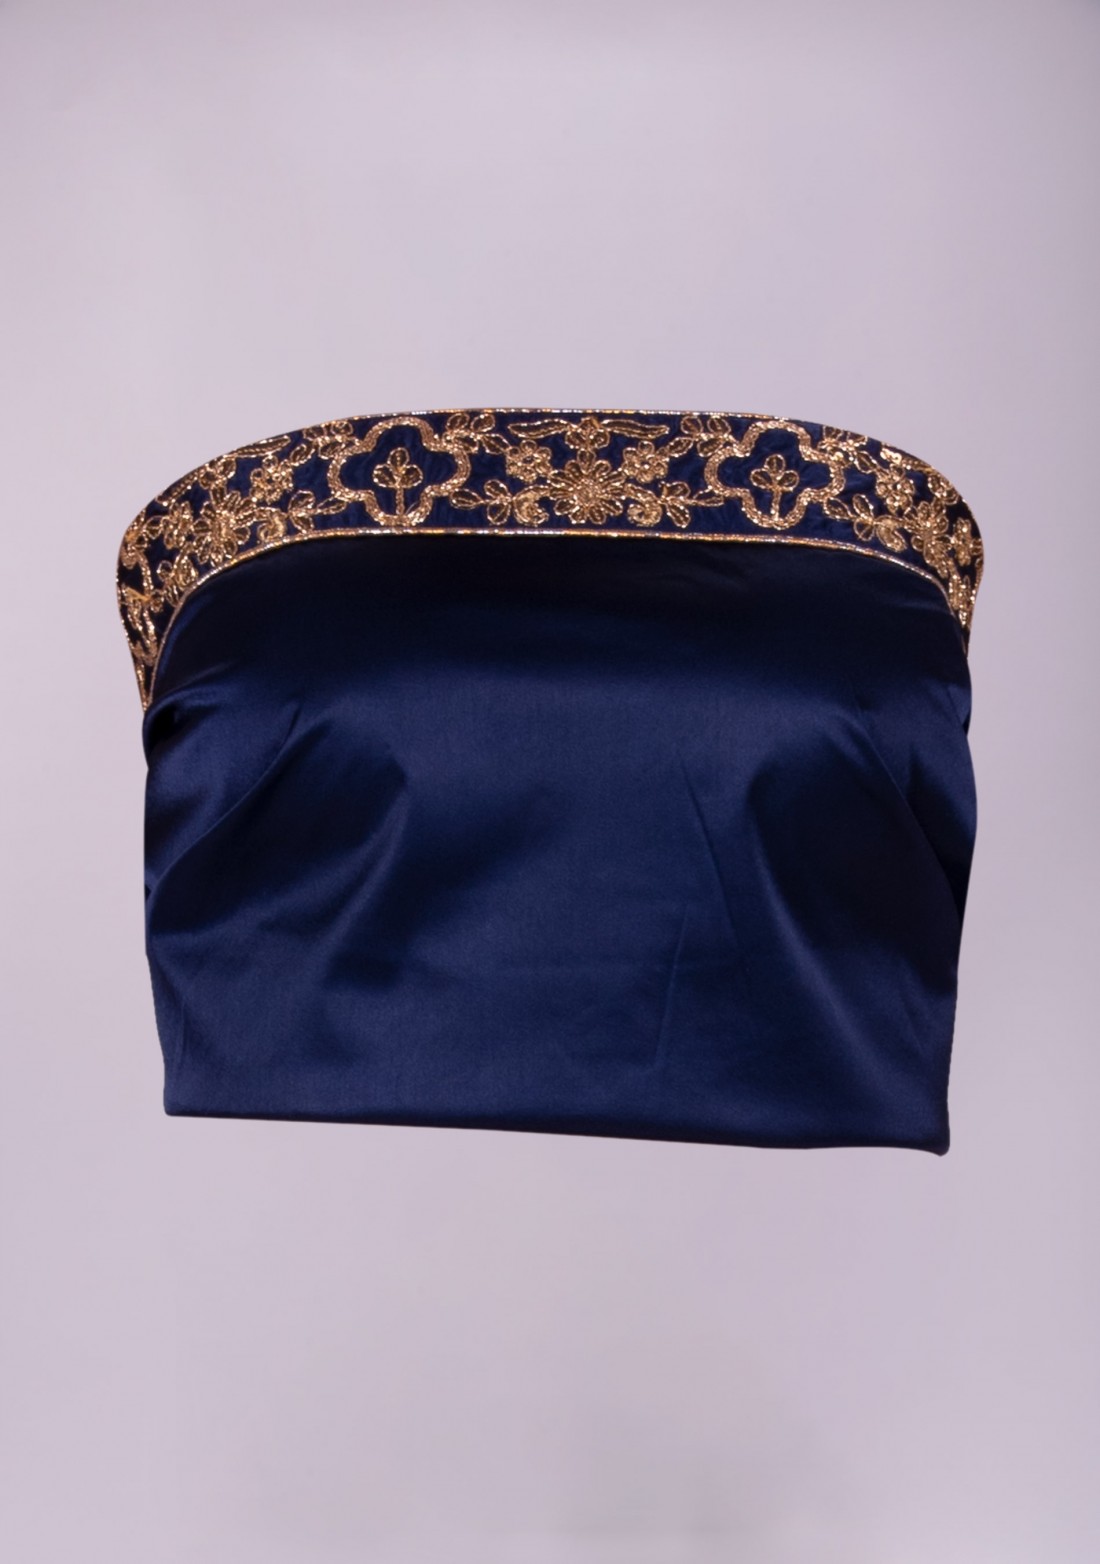 Navy Blue Embroidered Taffeta Silk Lehenga